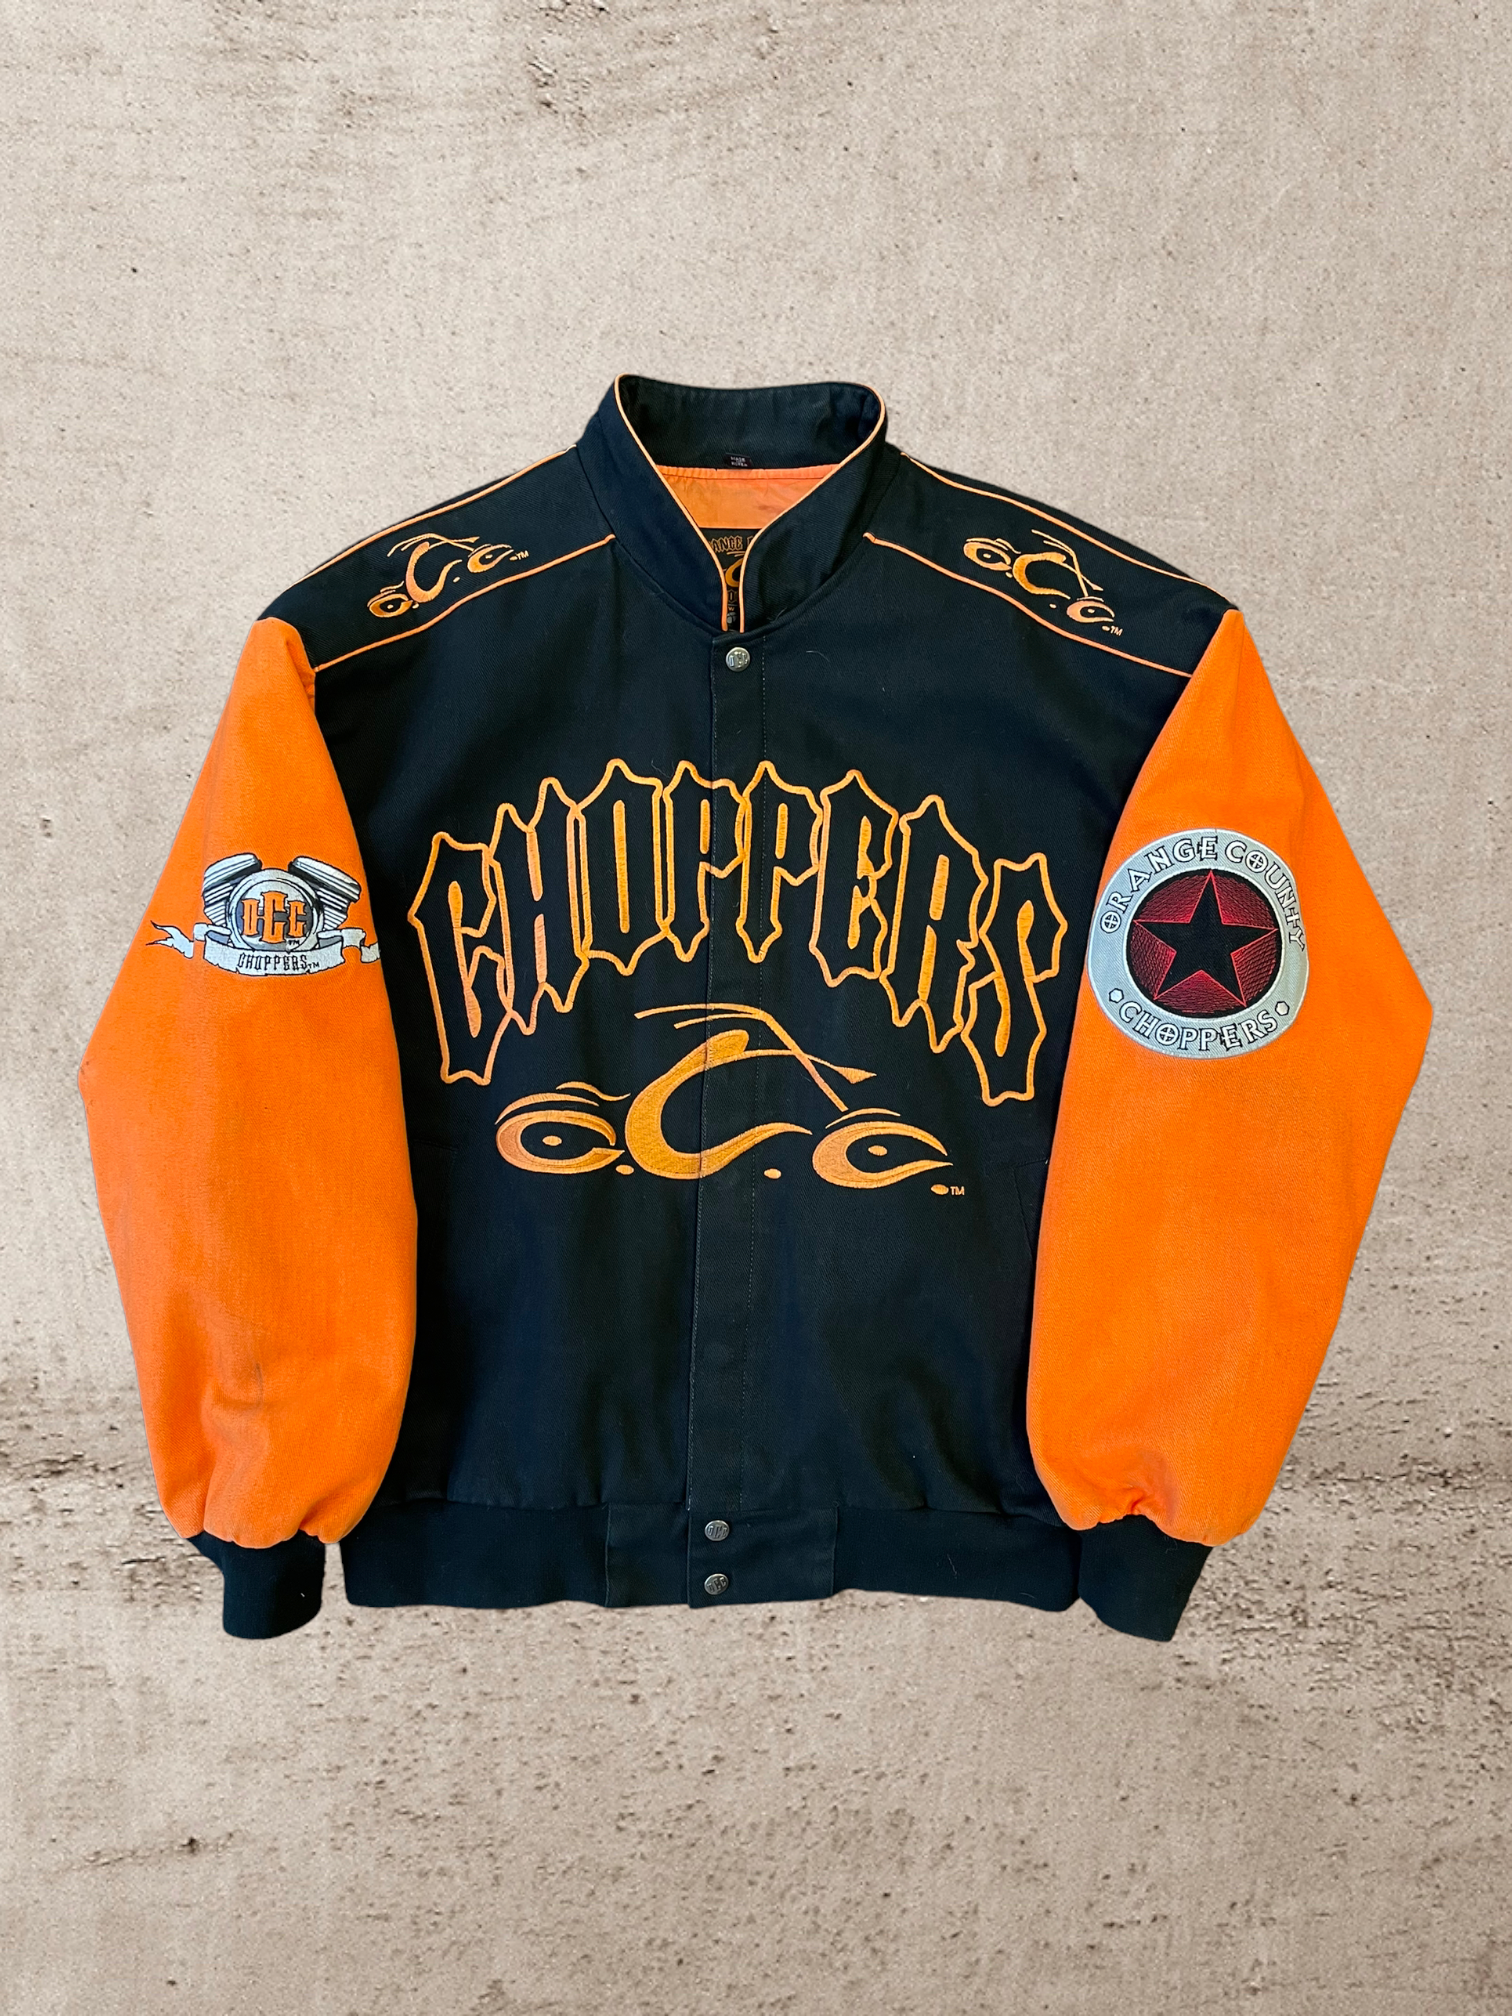 Vintage Orange County Choppers Racing Jacket - XL